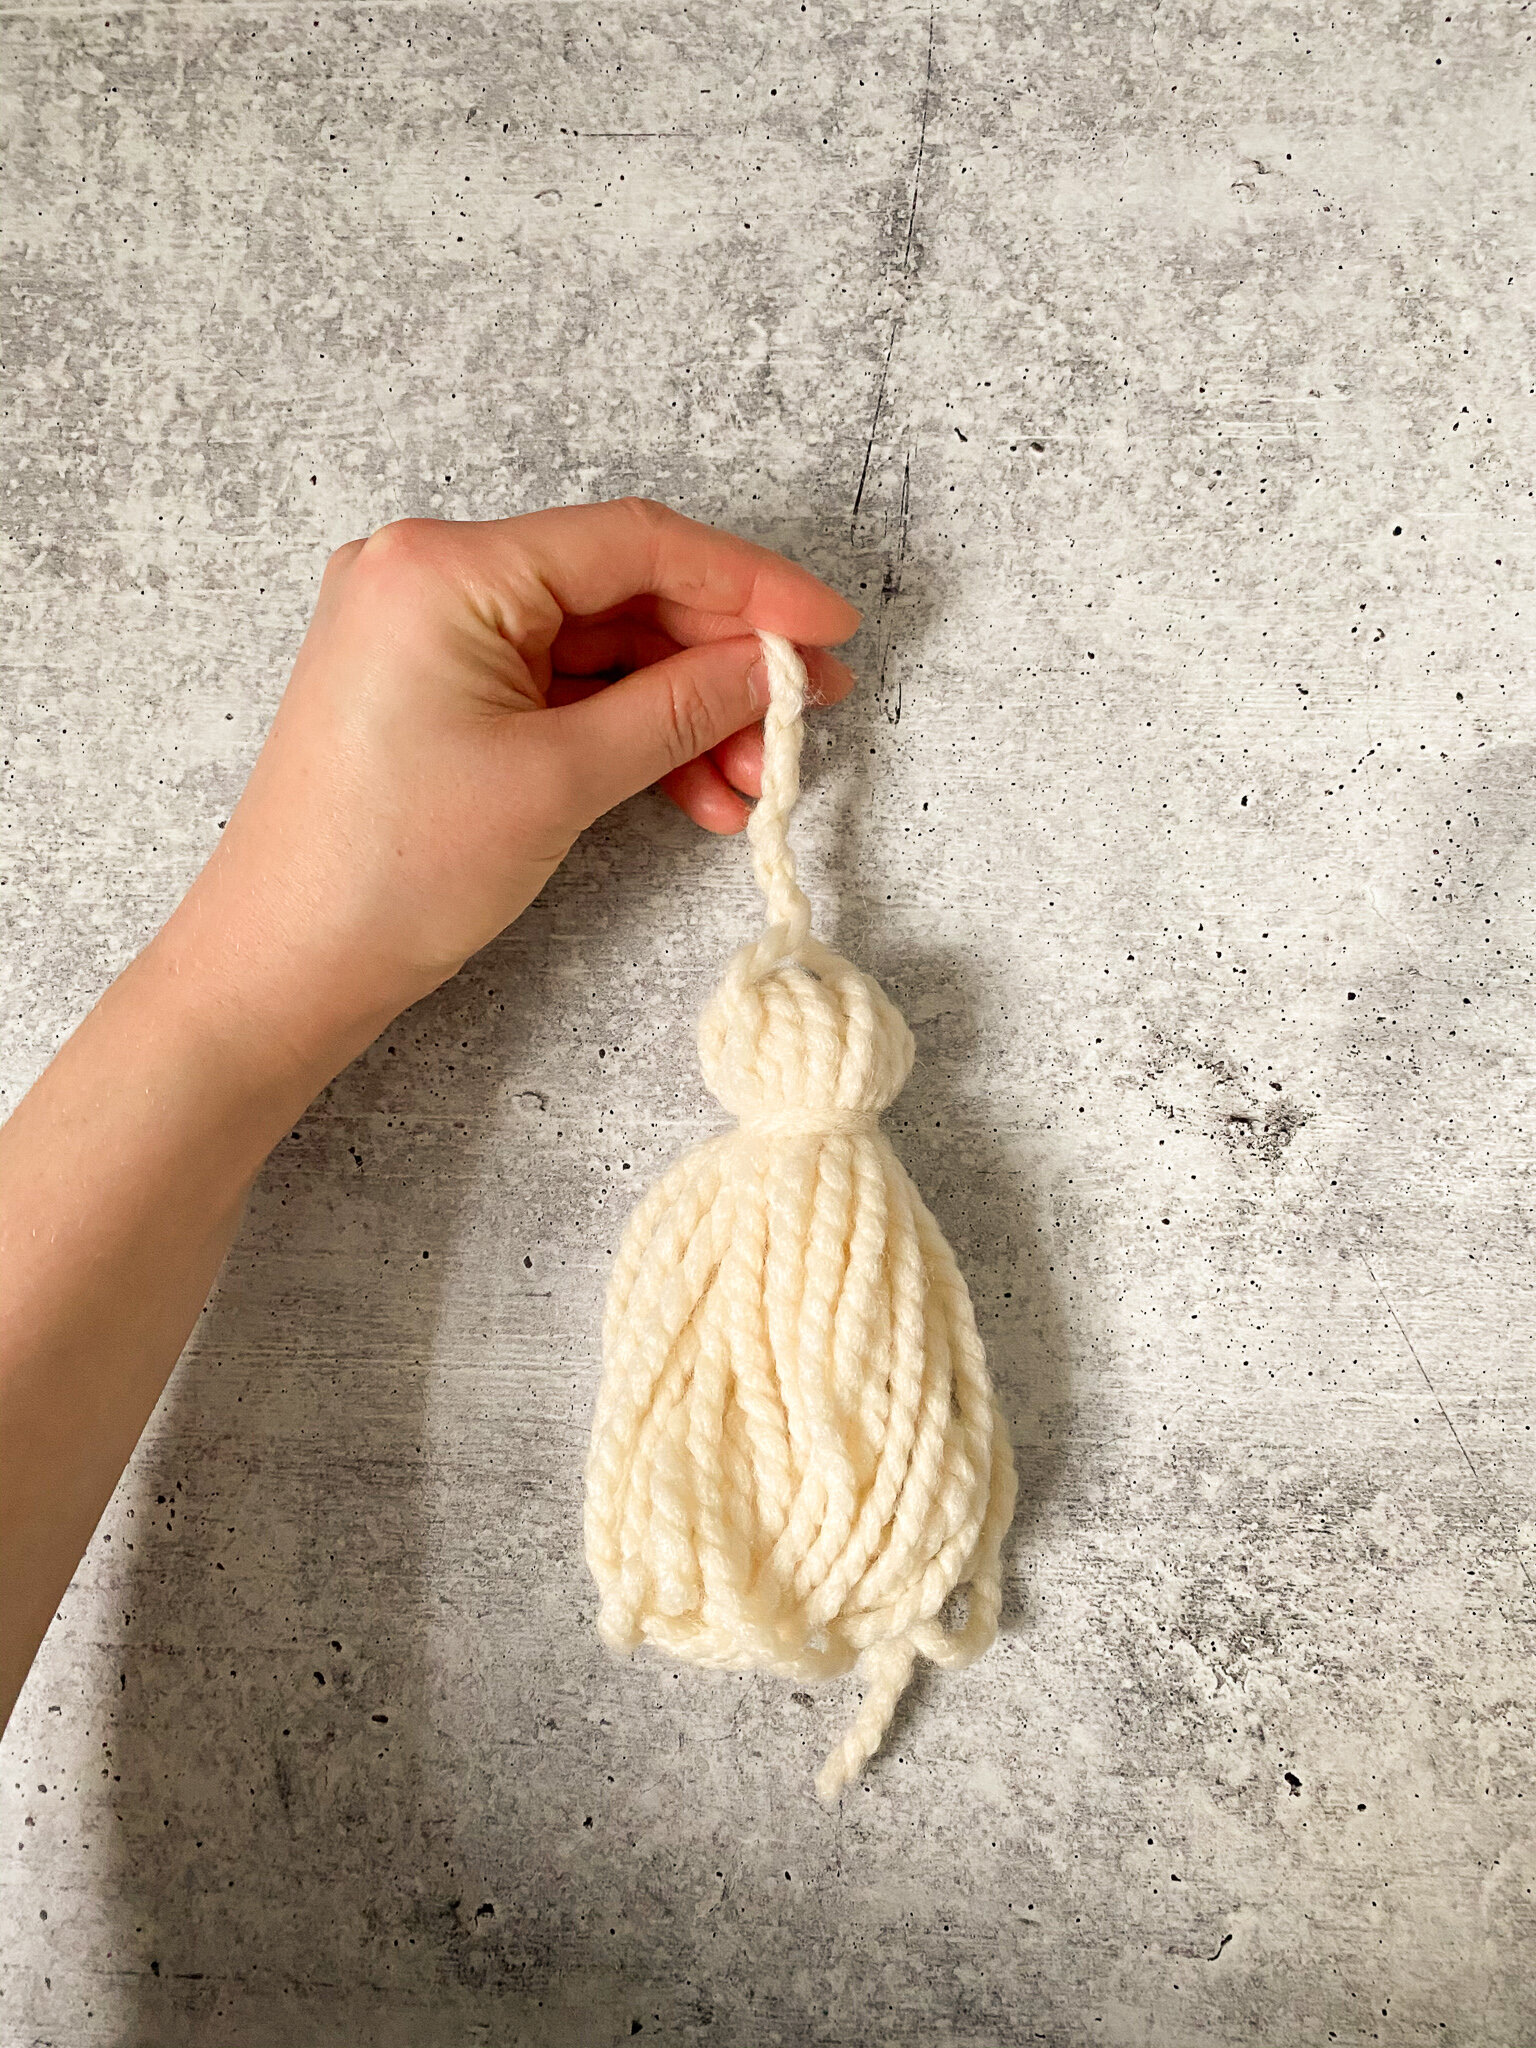 How to Make DIY Yarn Tassels